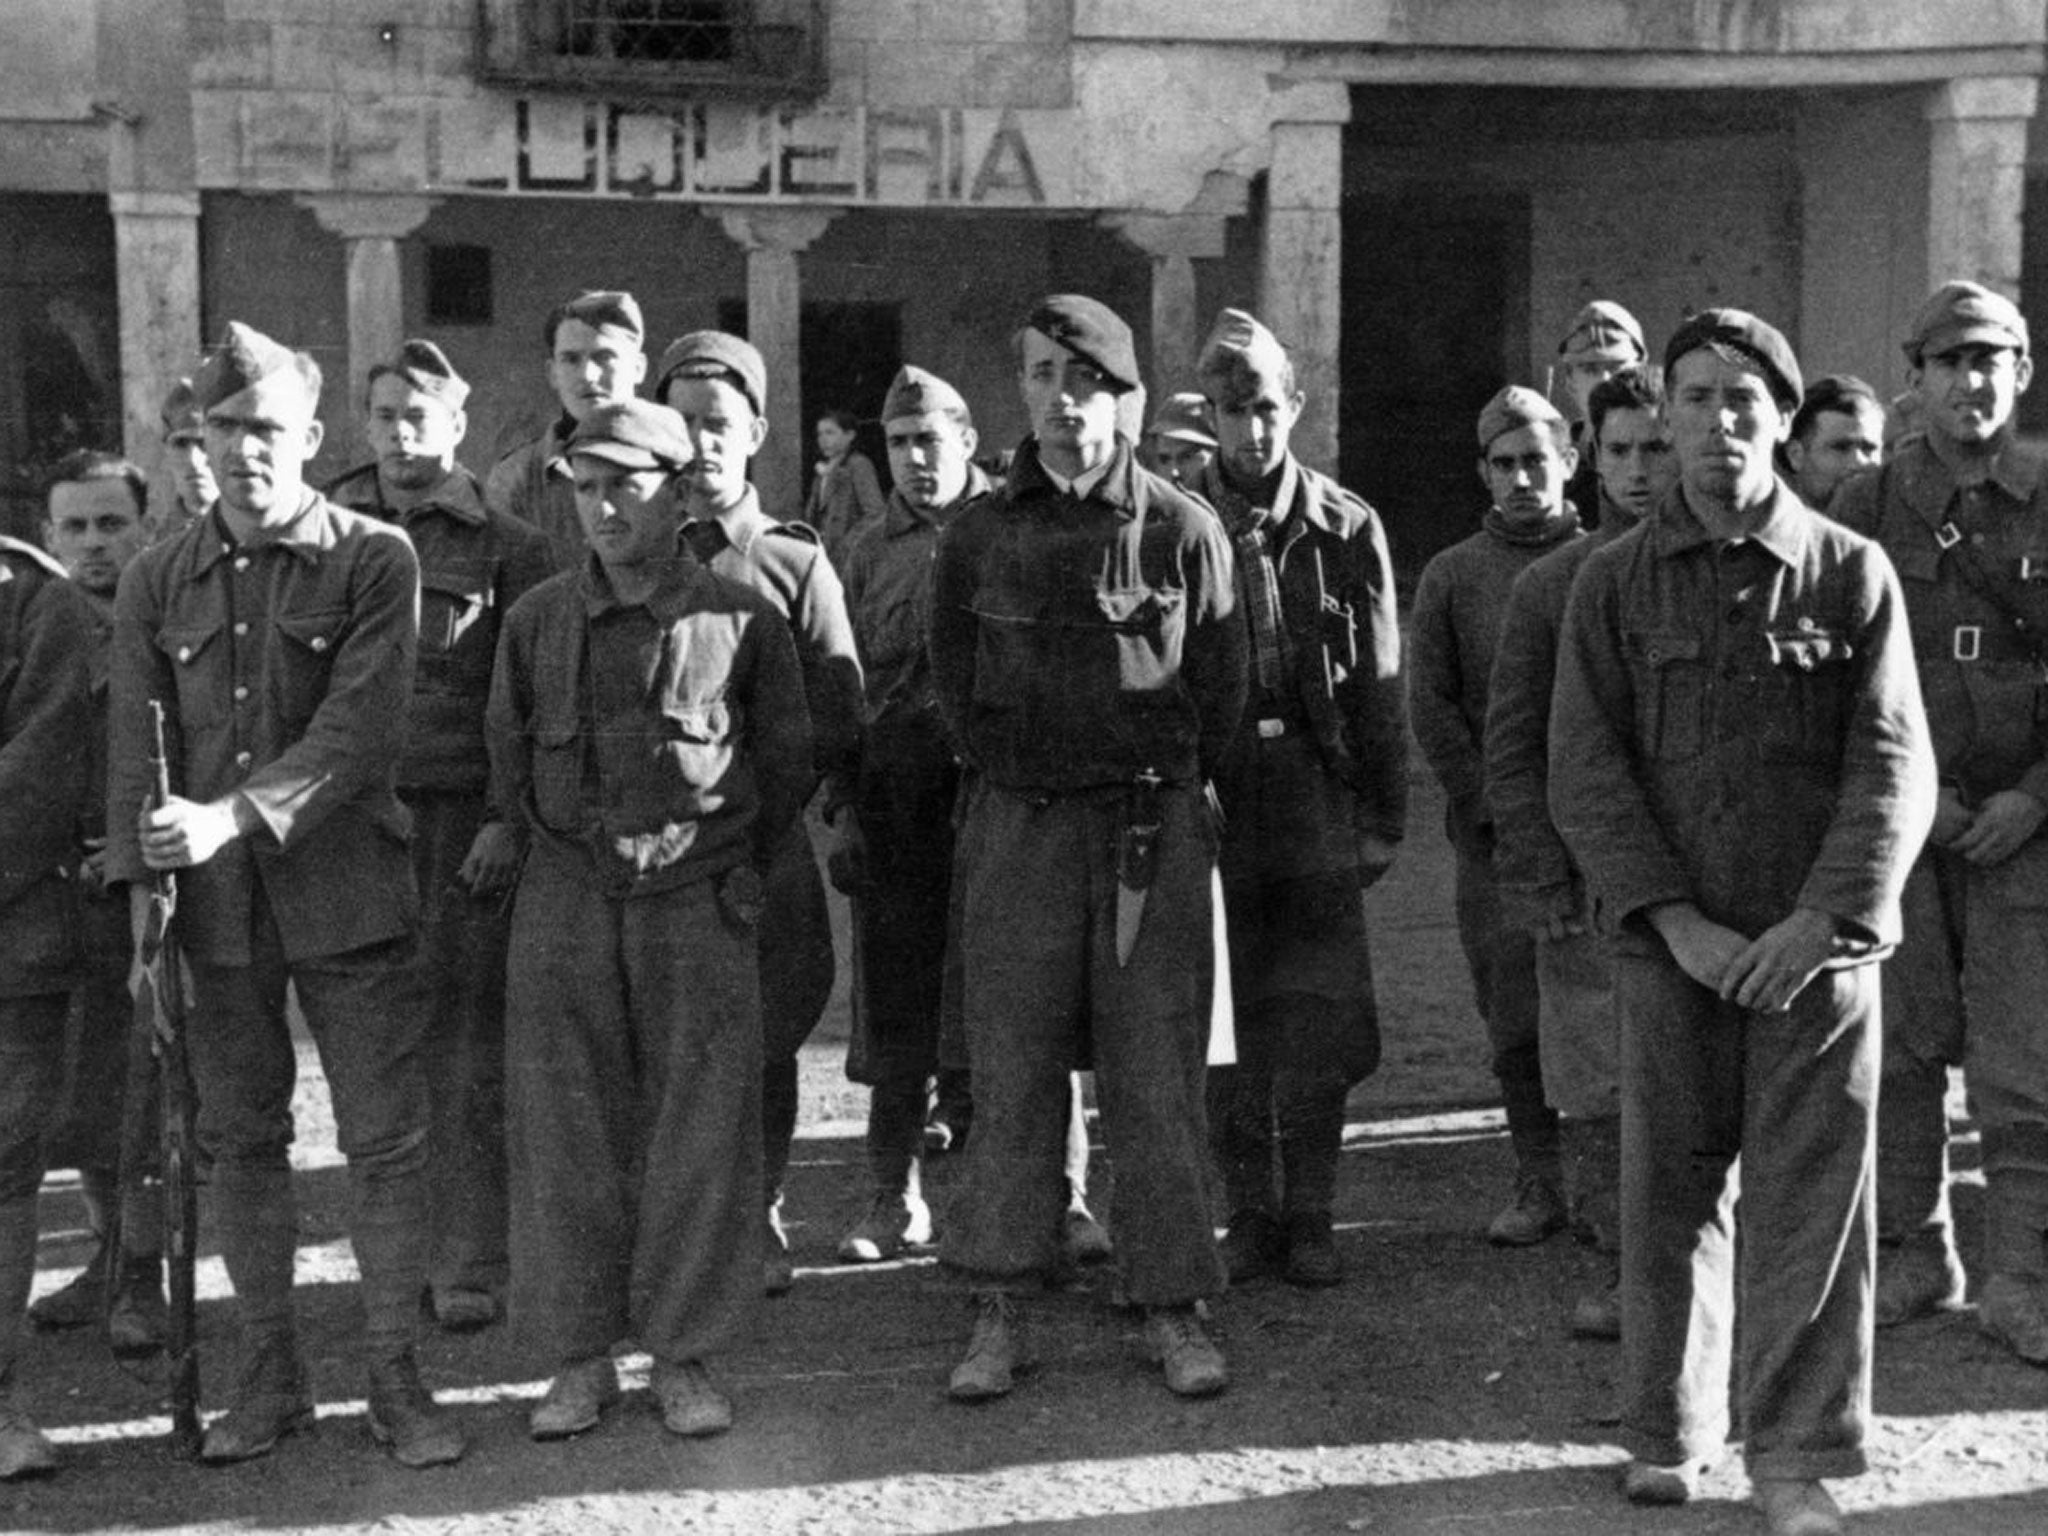 Men of the British Battalion of the XV International Brigade in Spain, 1937 (Getty)